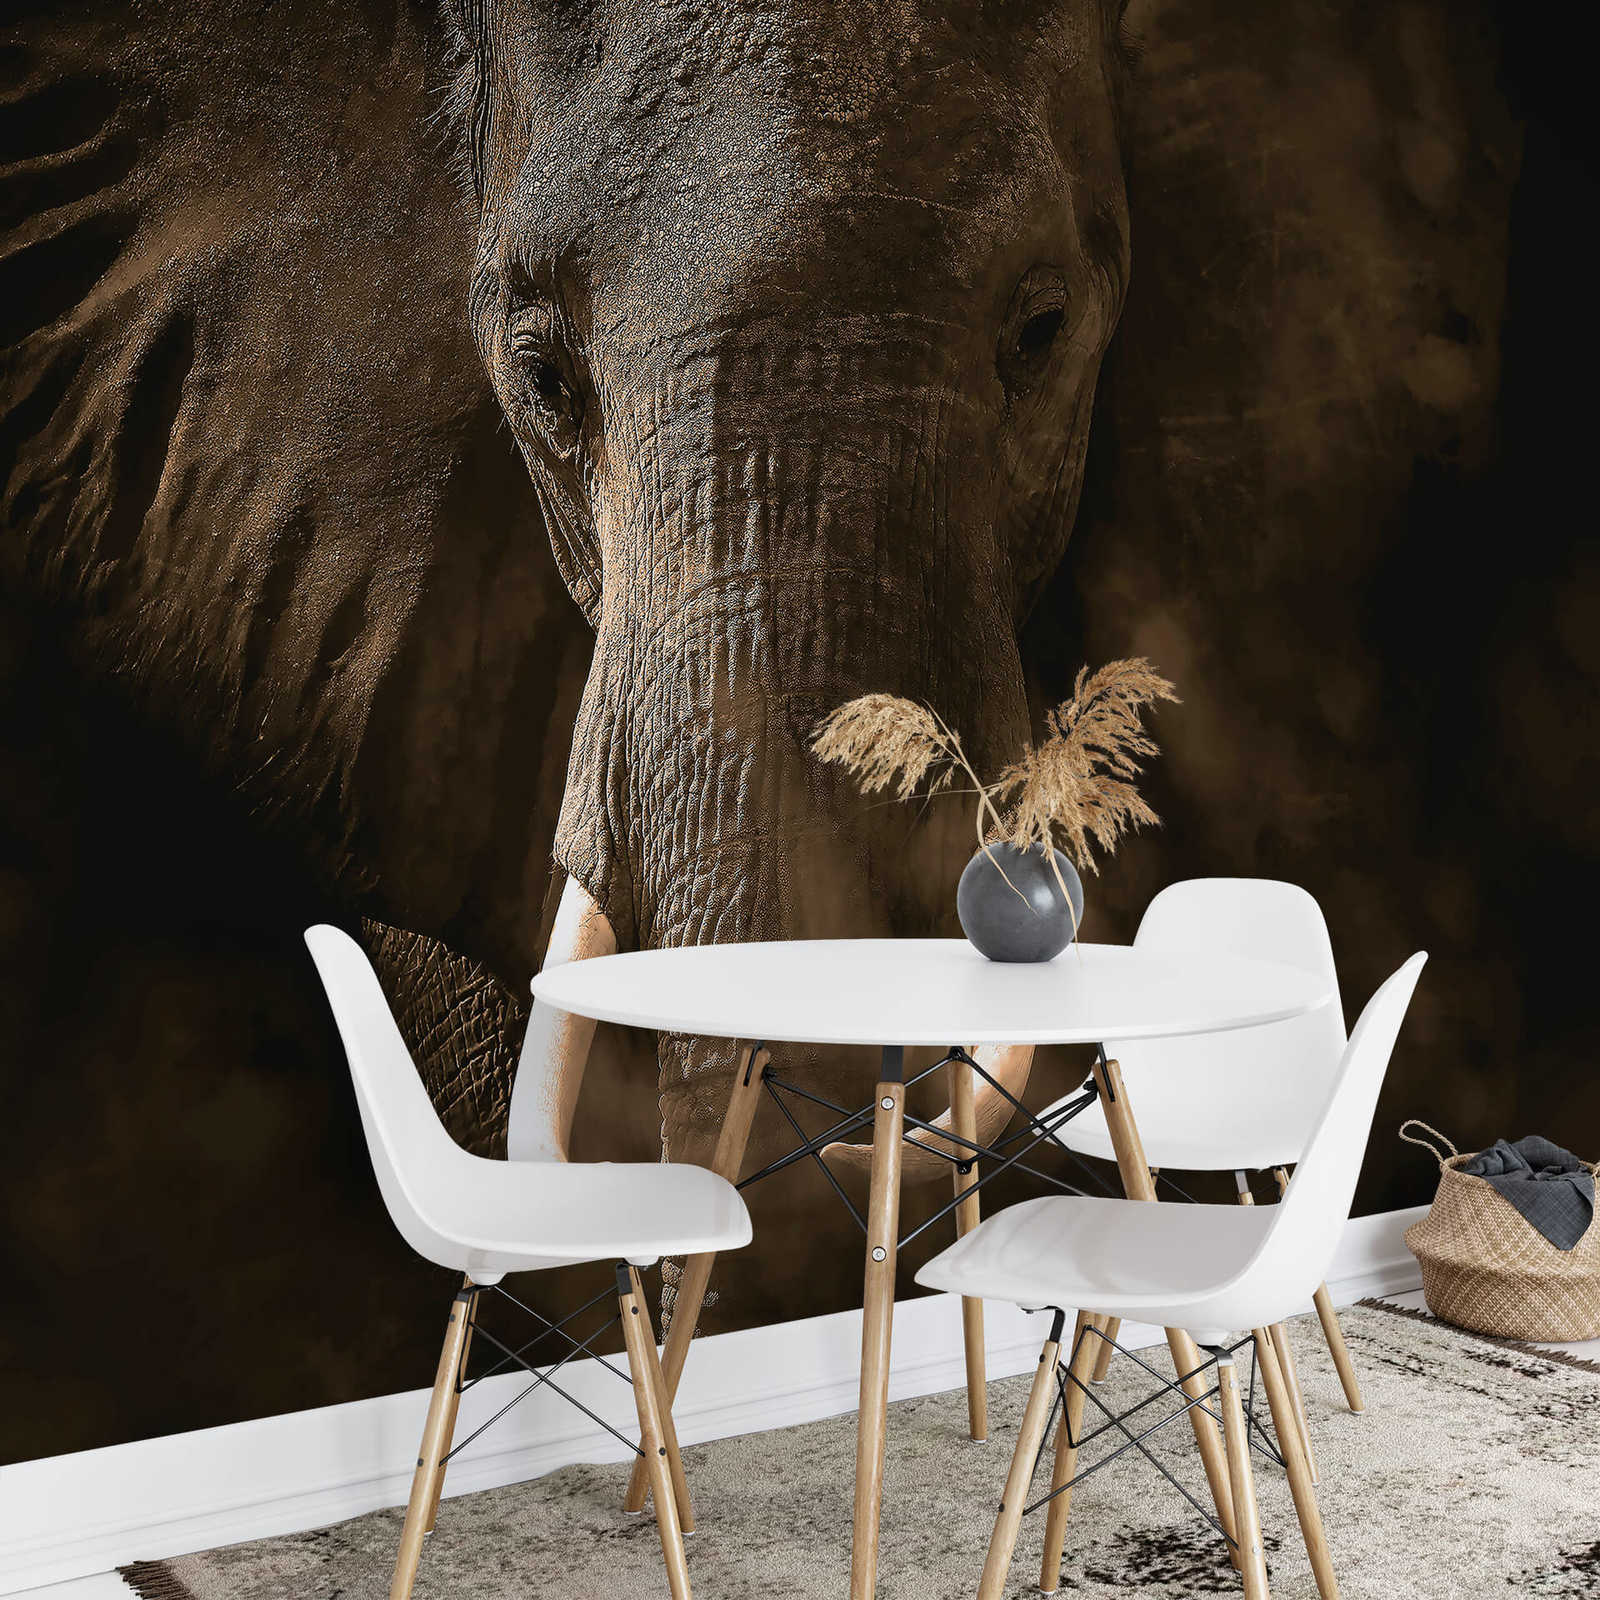             Photo wallpaper safari animal elephant - grey, brown, white
        